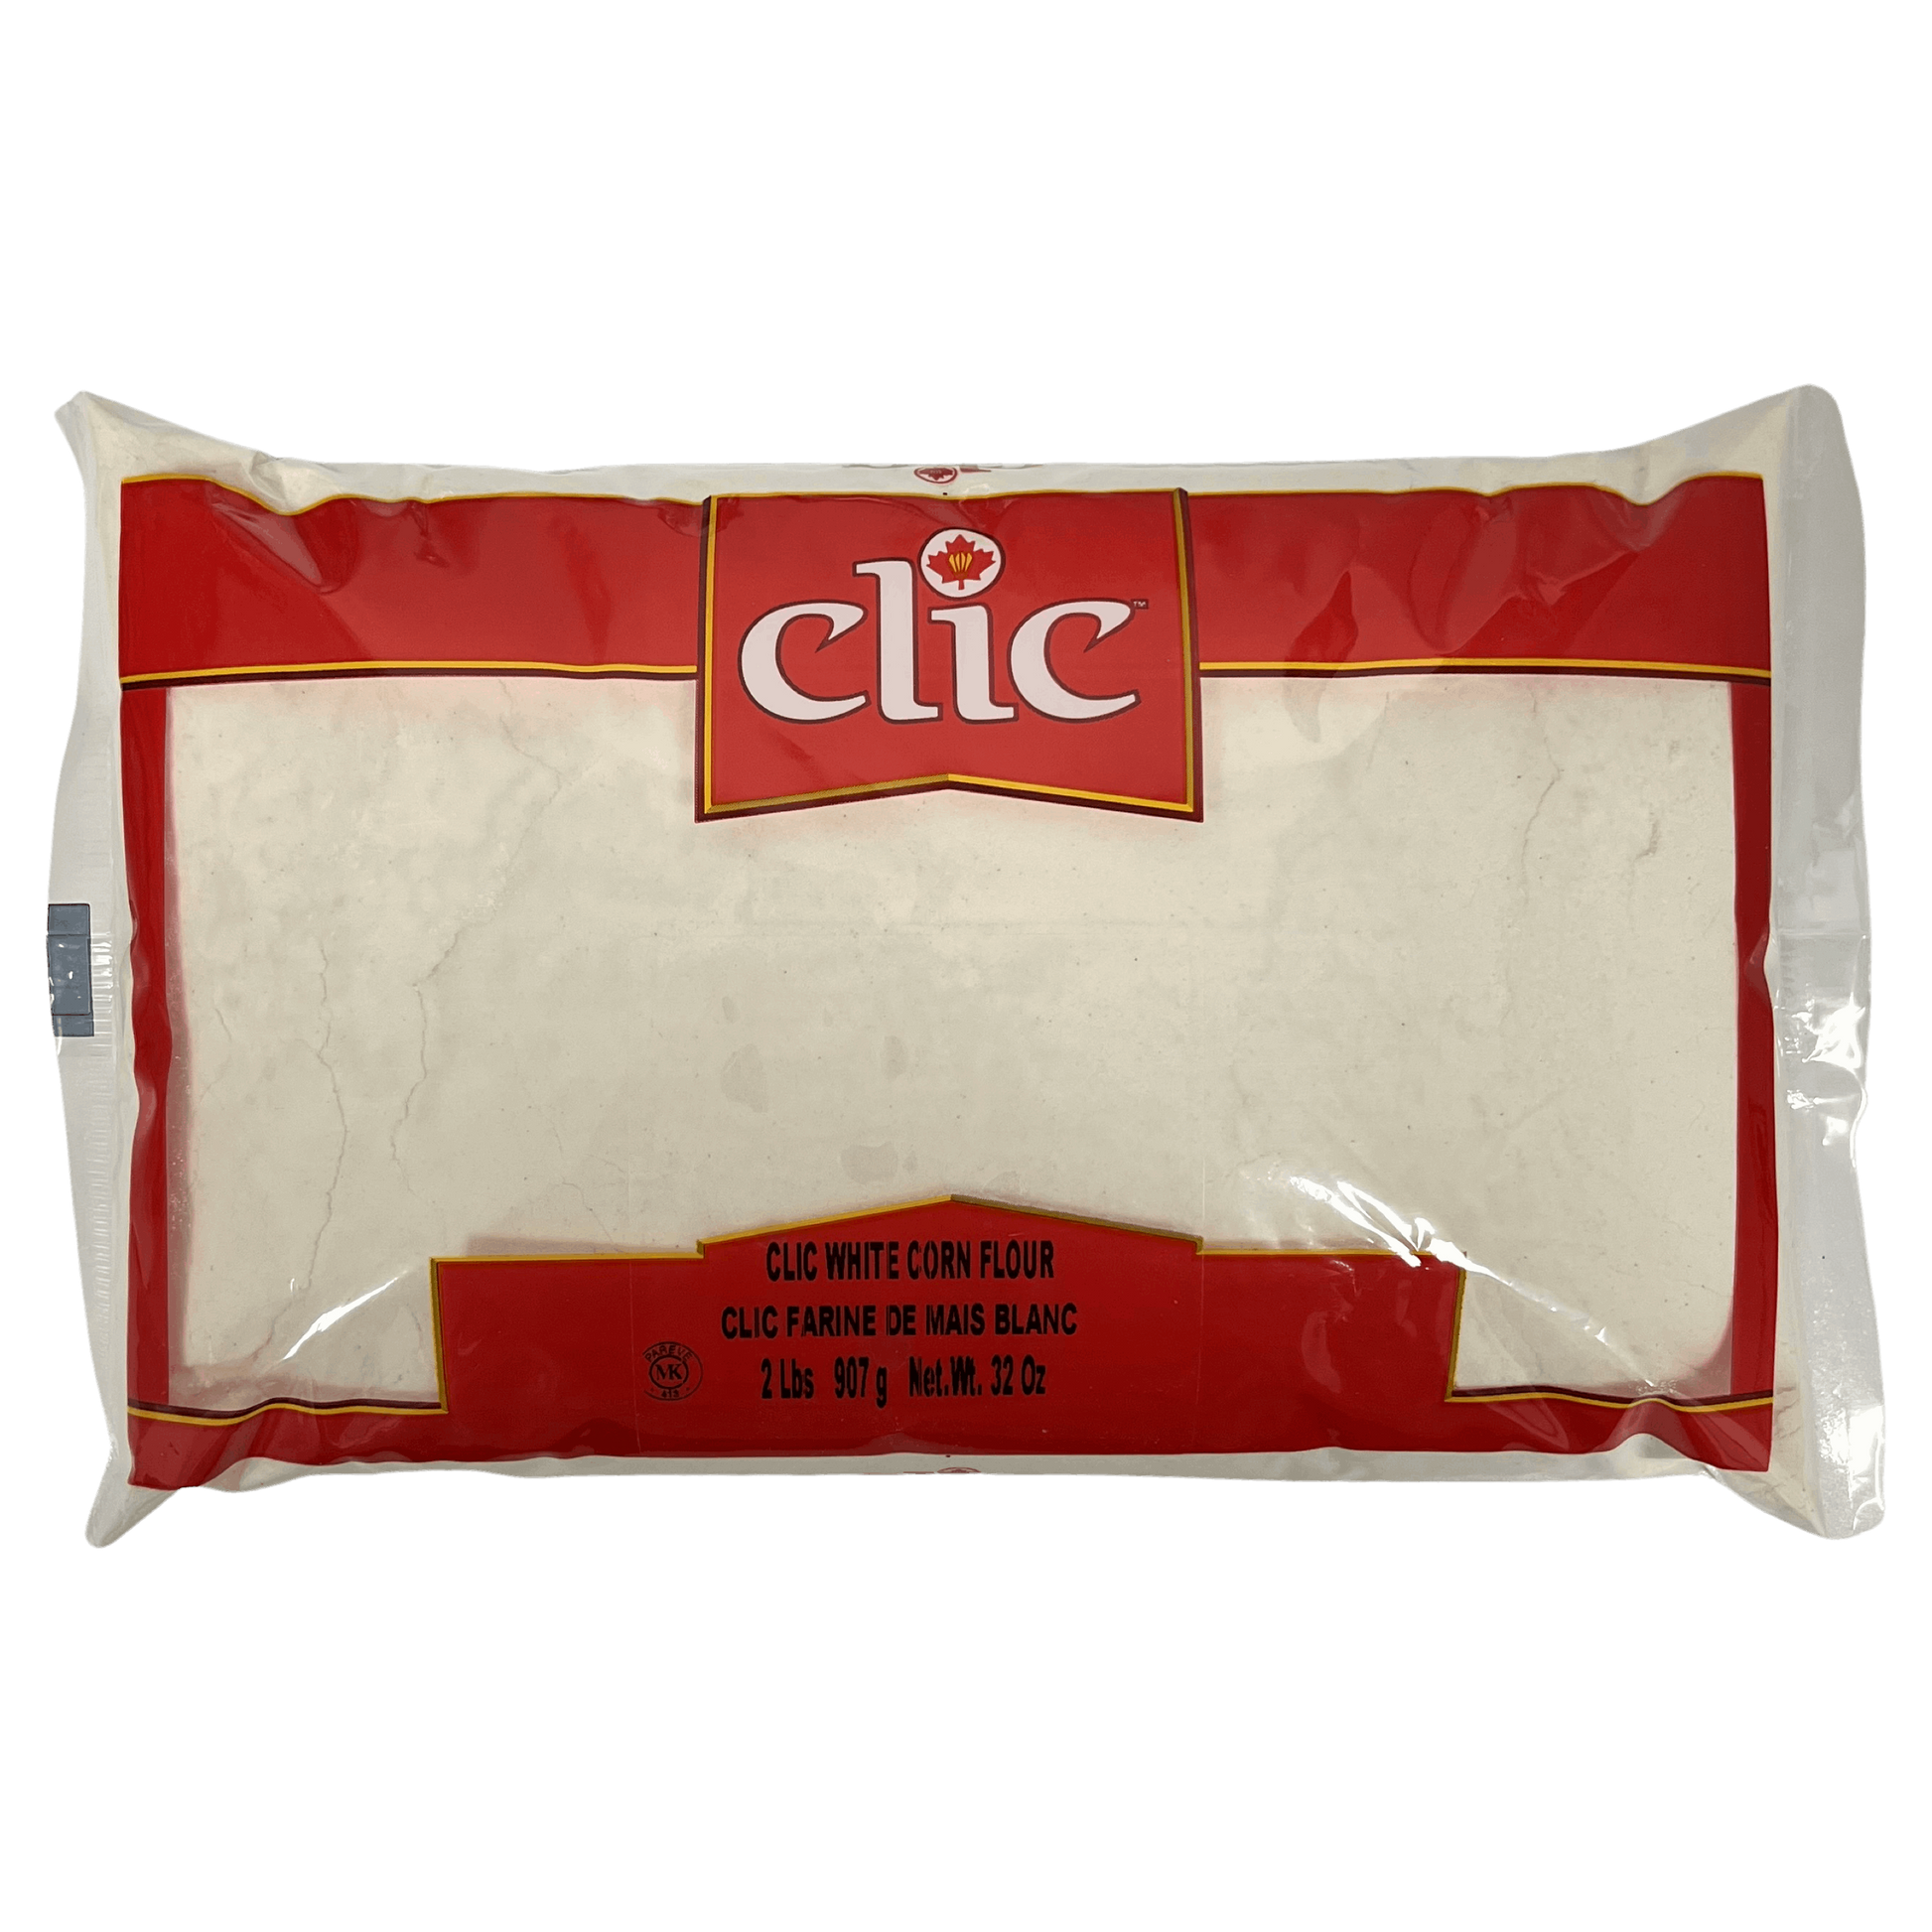 Clic White Corn Flour 907g Damaski